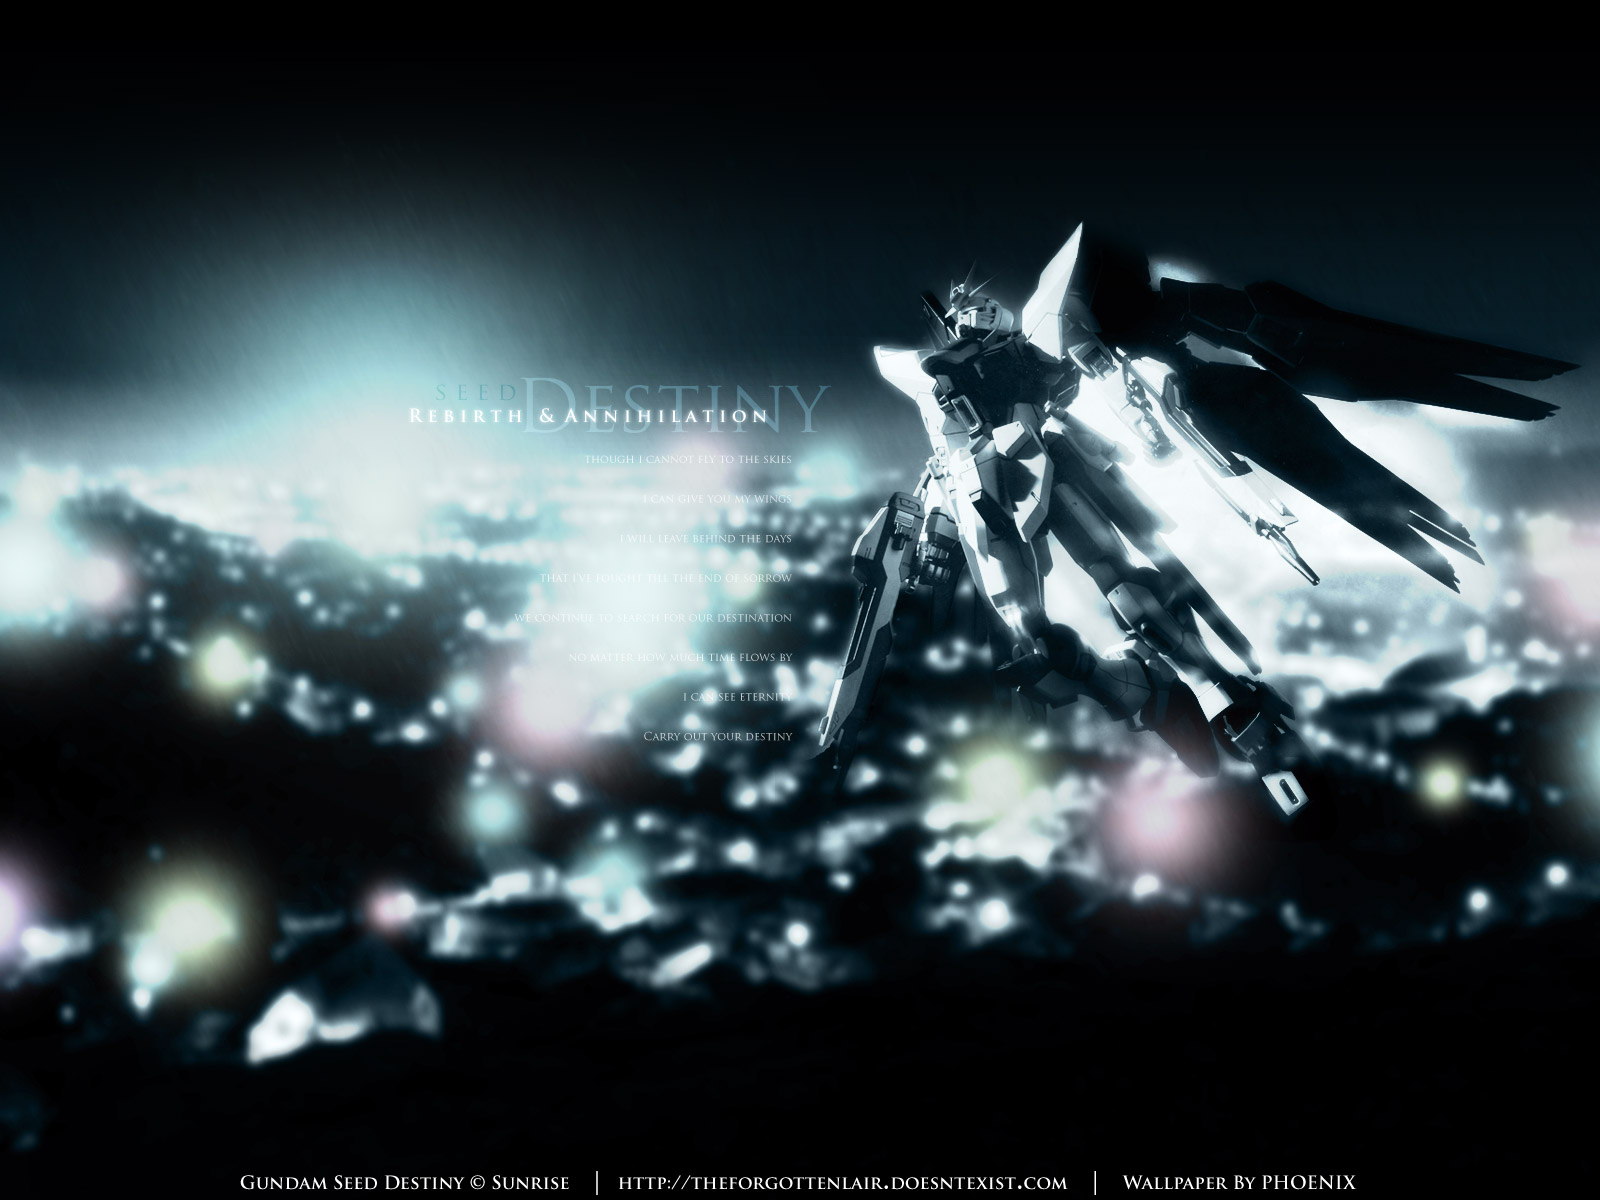 Gundam Seed Destiny Image Wallpaper Photos